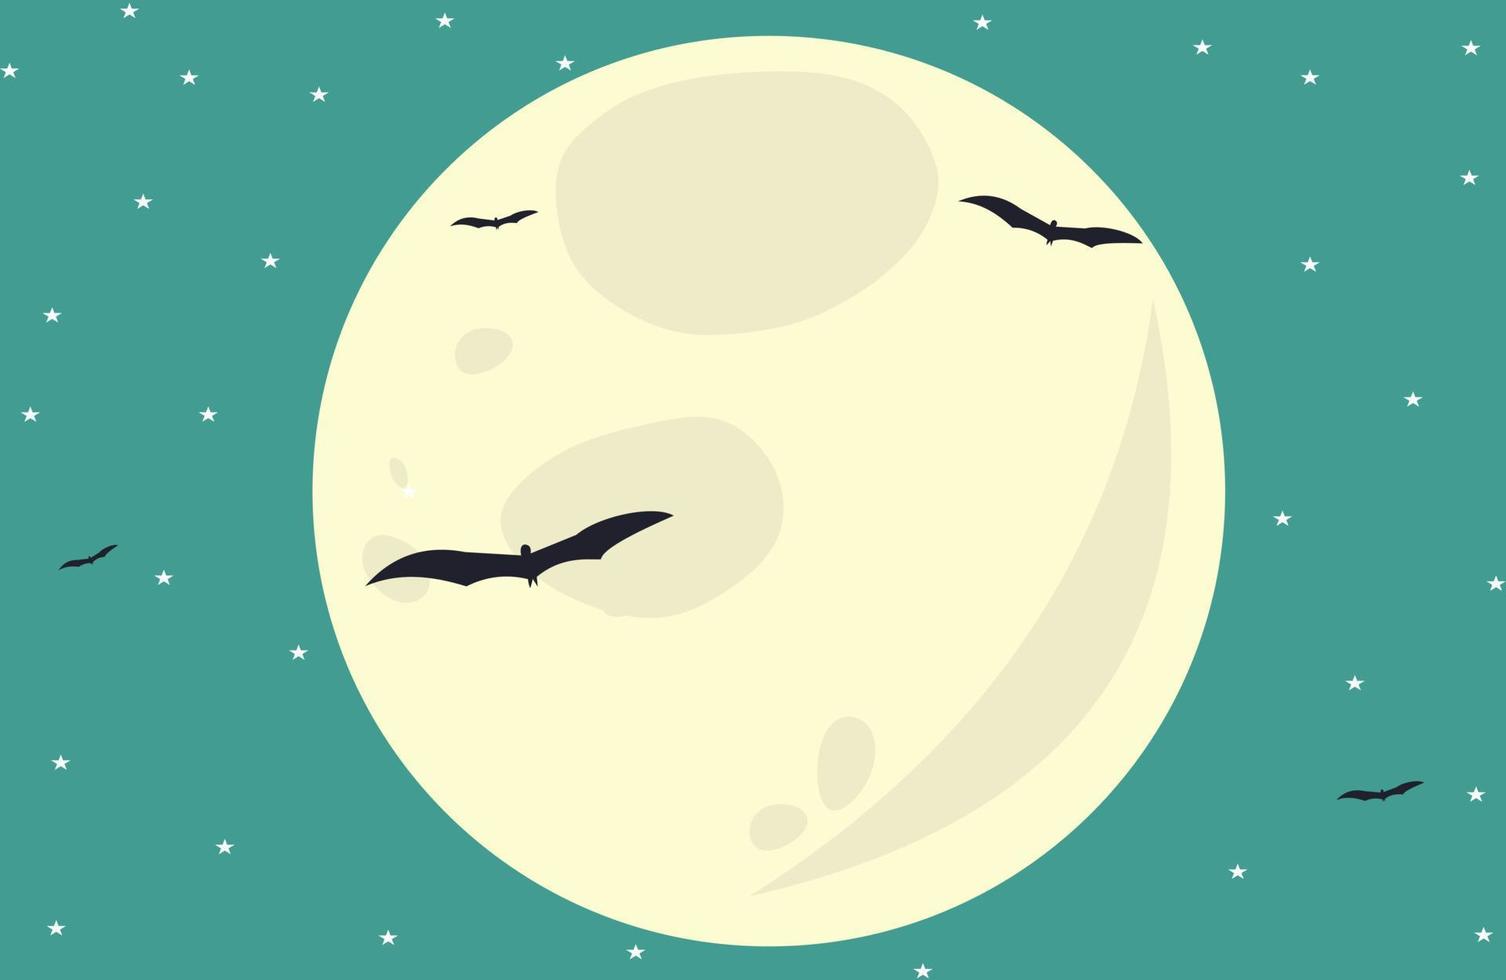 Full moon night with bats icon illustration vector